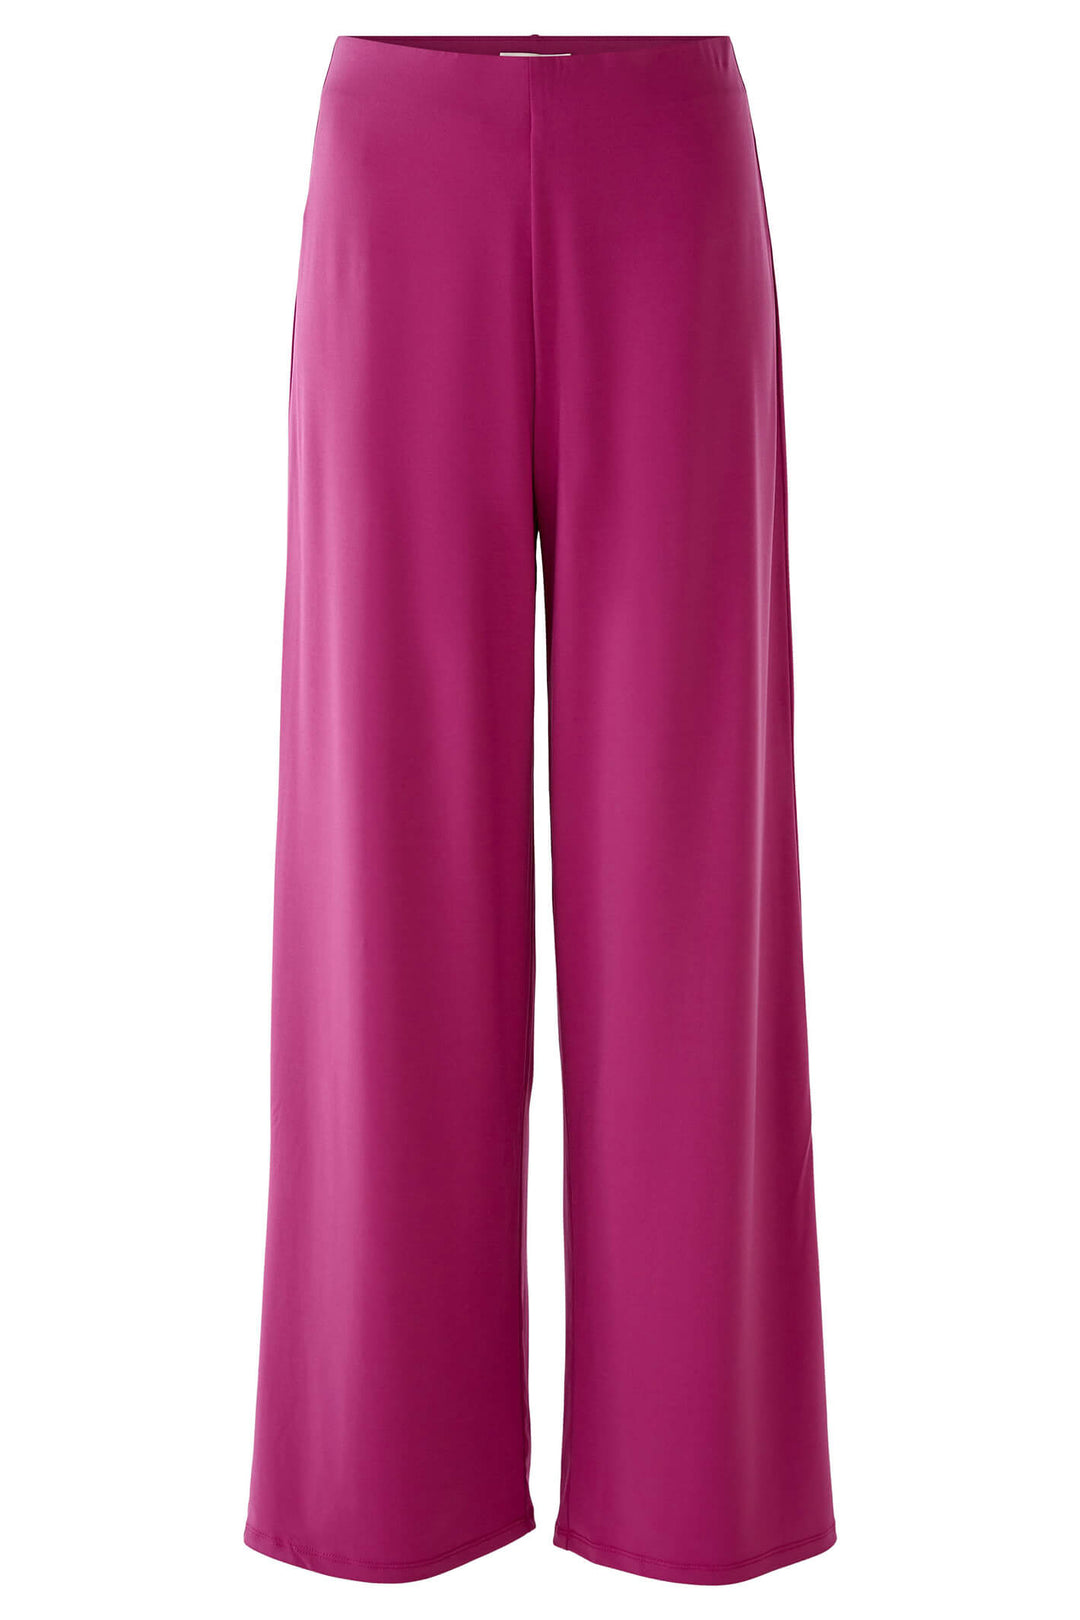 Oui 79210 Clover Pink Wide Leg Trousers - Olivia Grace Fashion